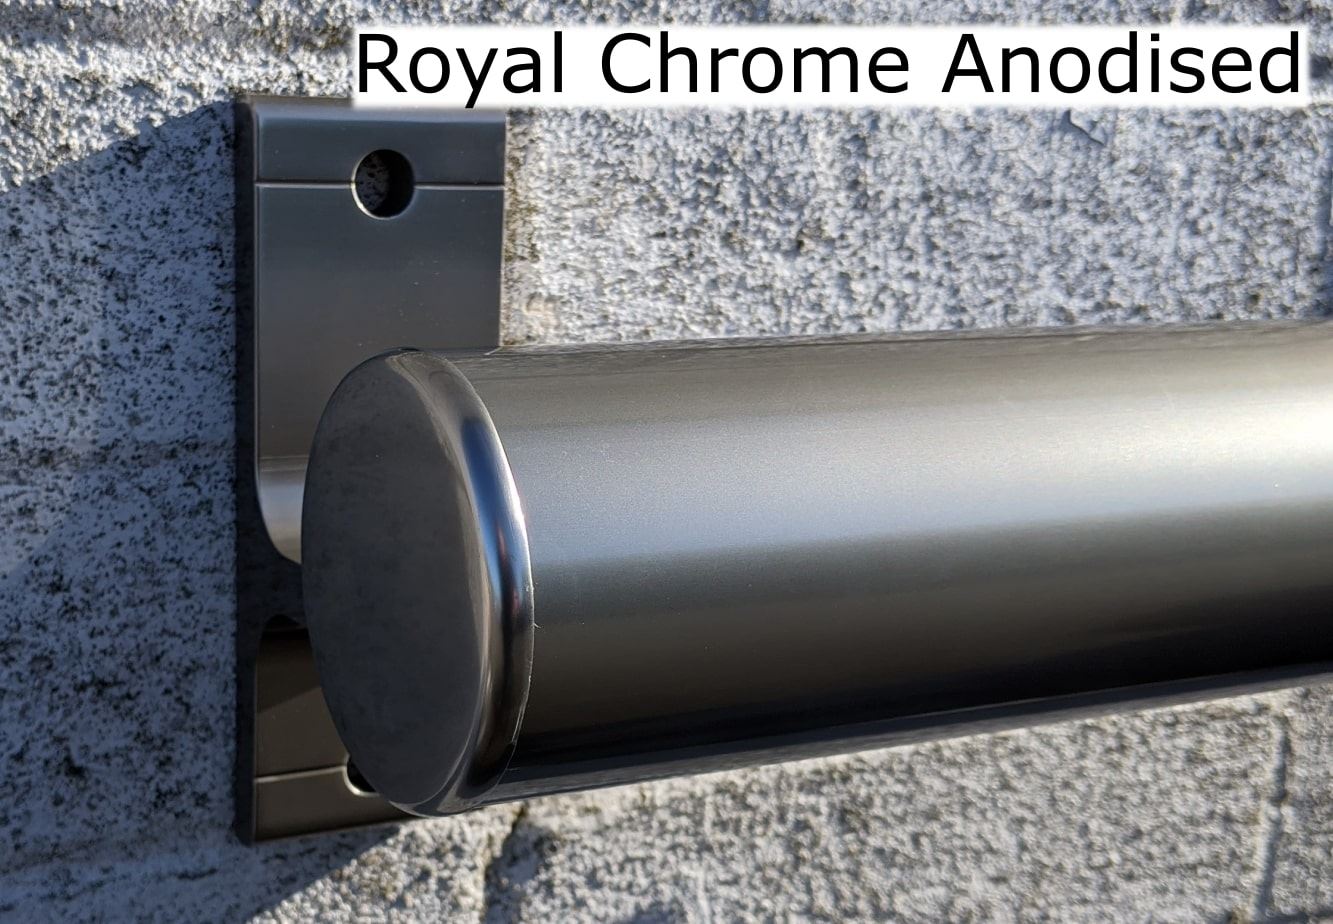 Royal Chrome anodised - colour orbit handrail